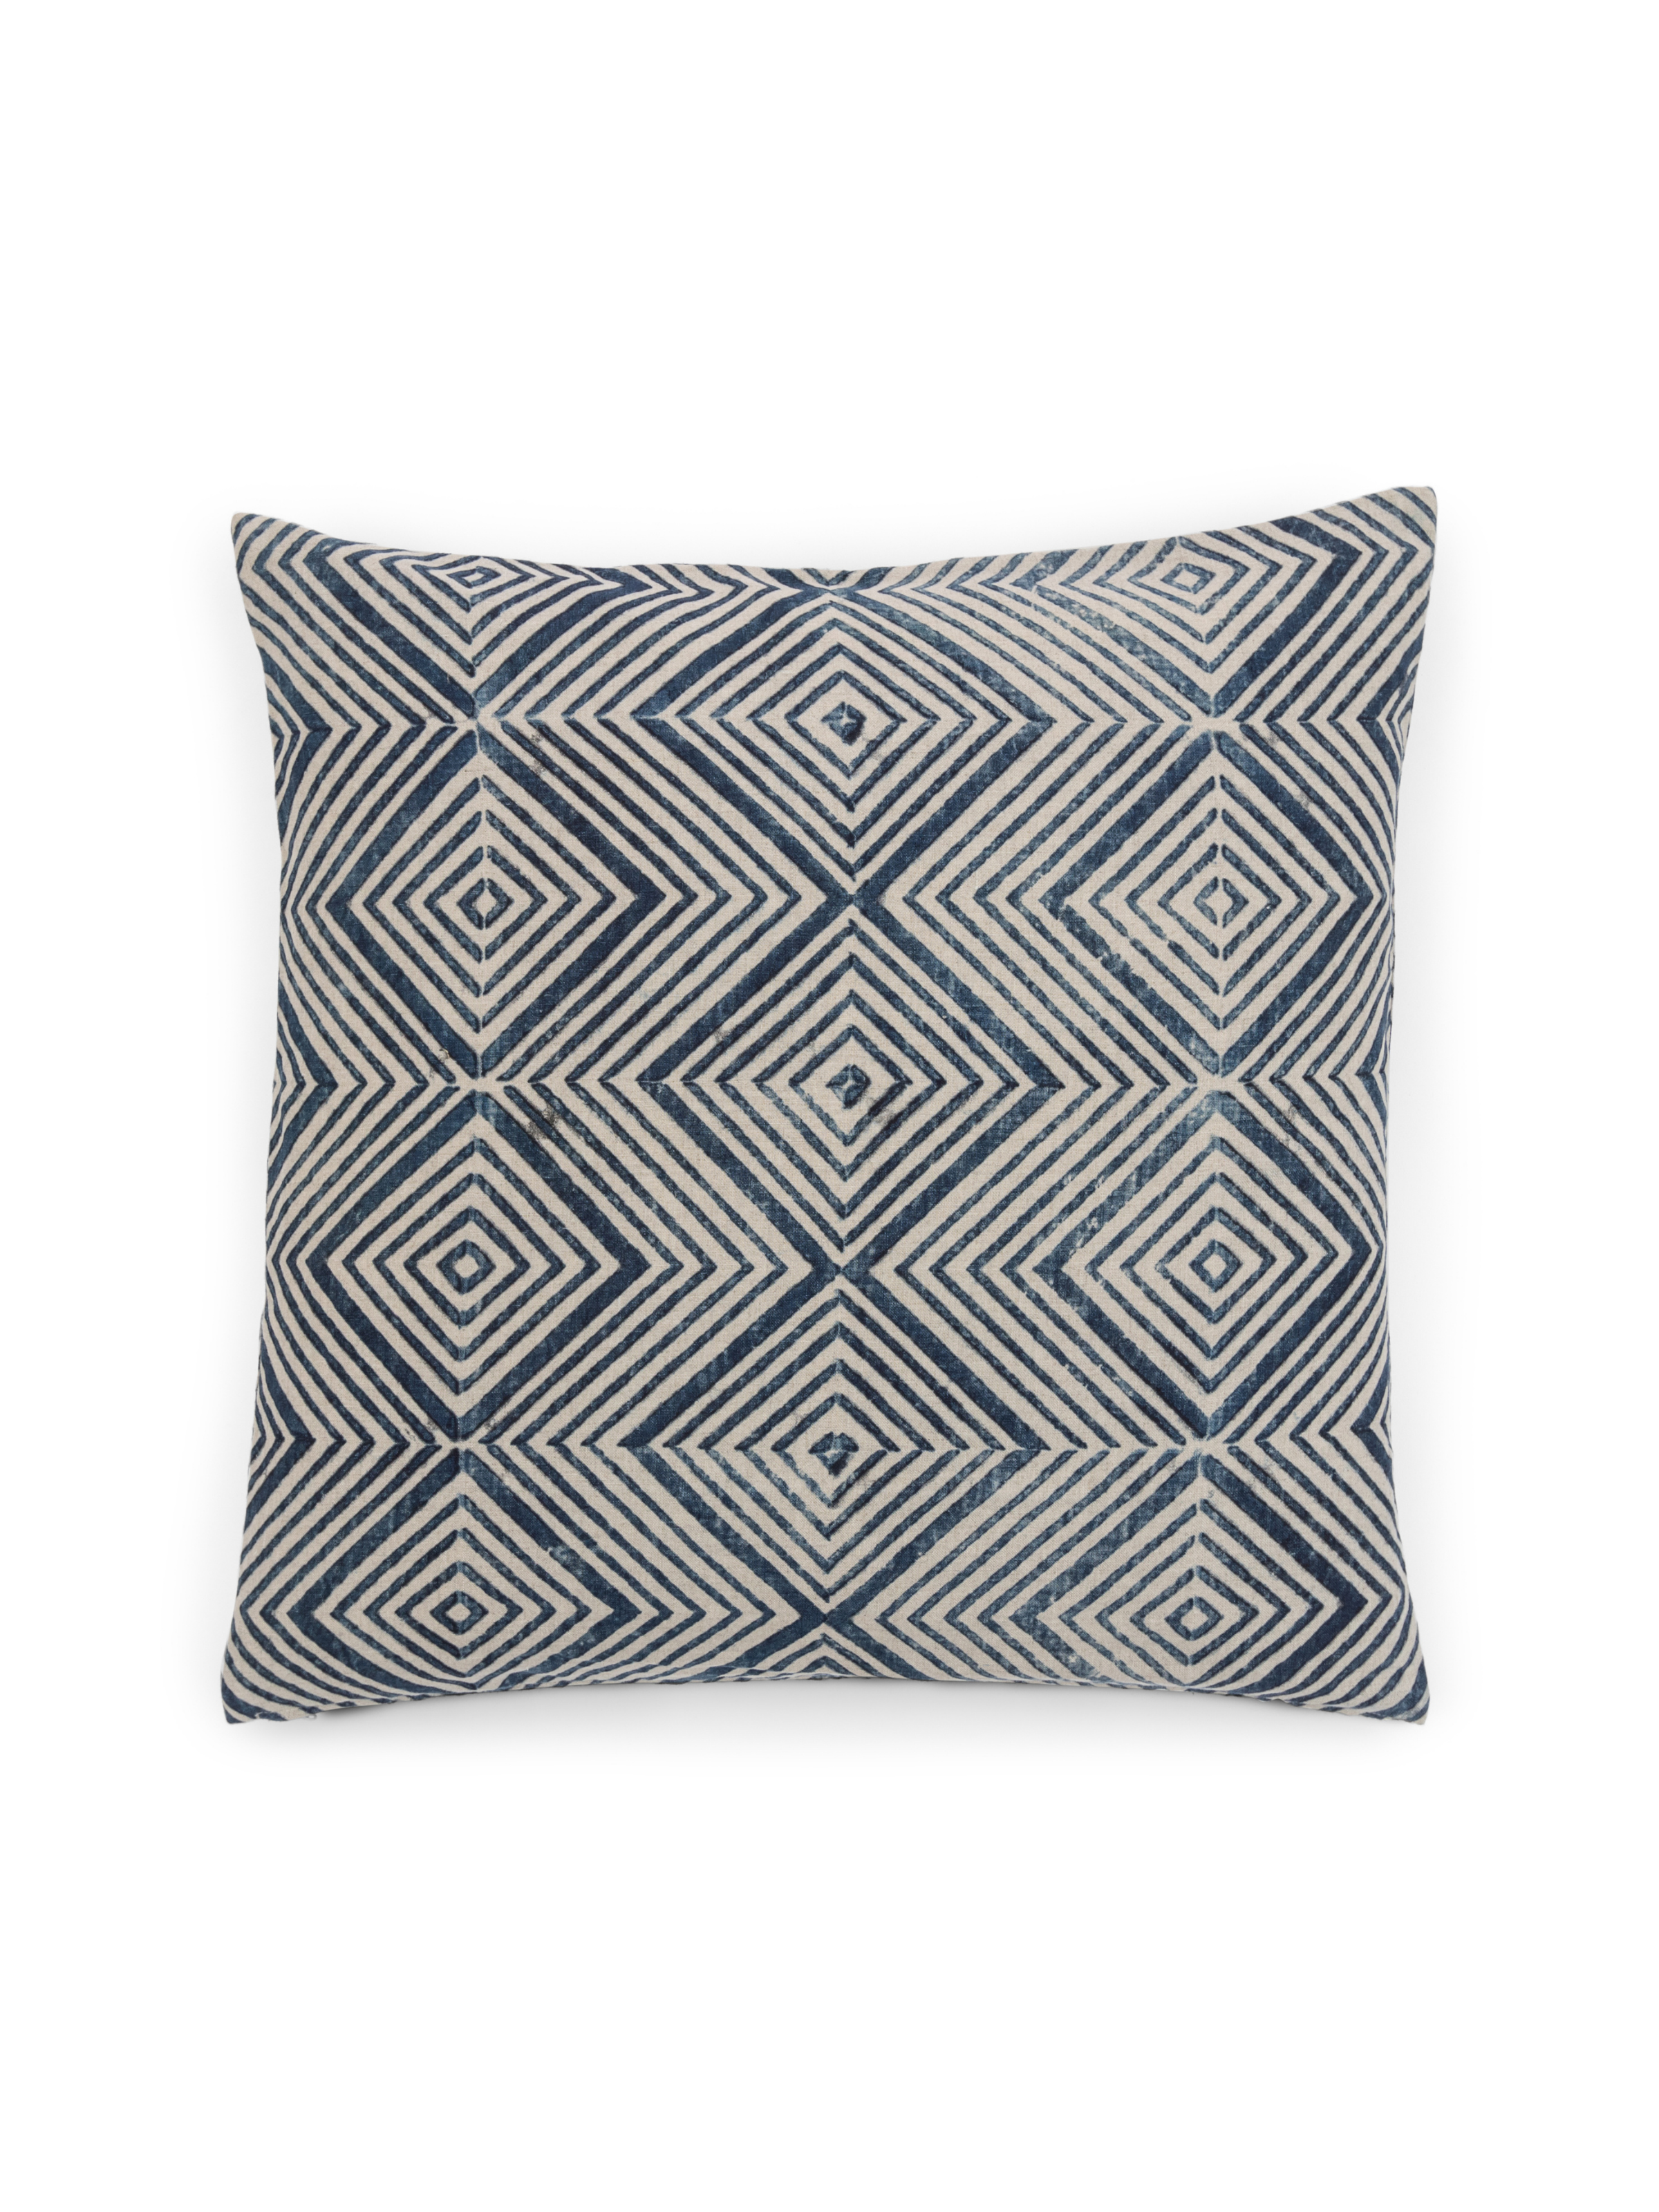 Ashante Indigo Decorative Pillow